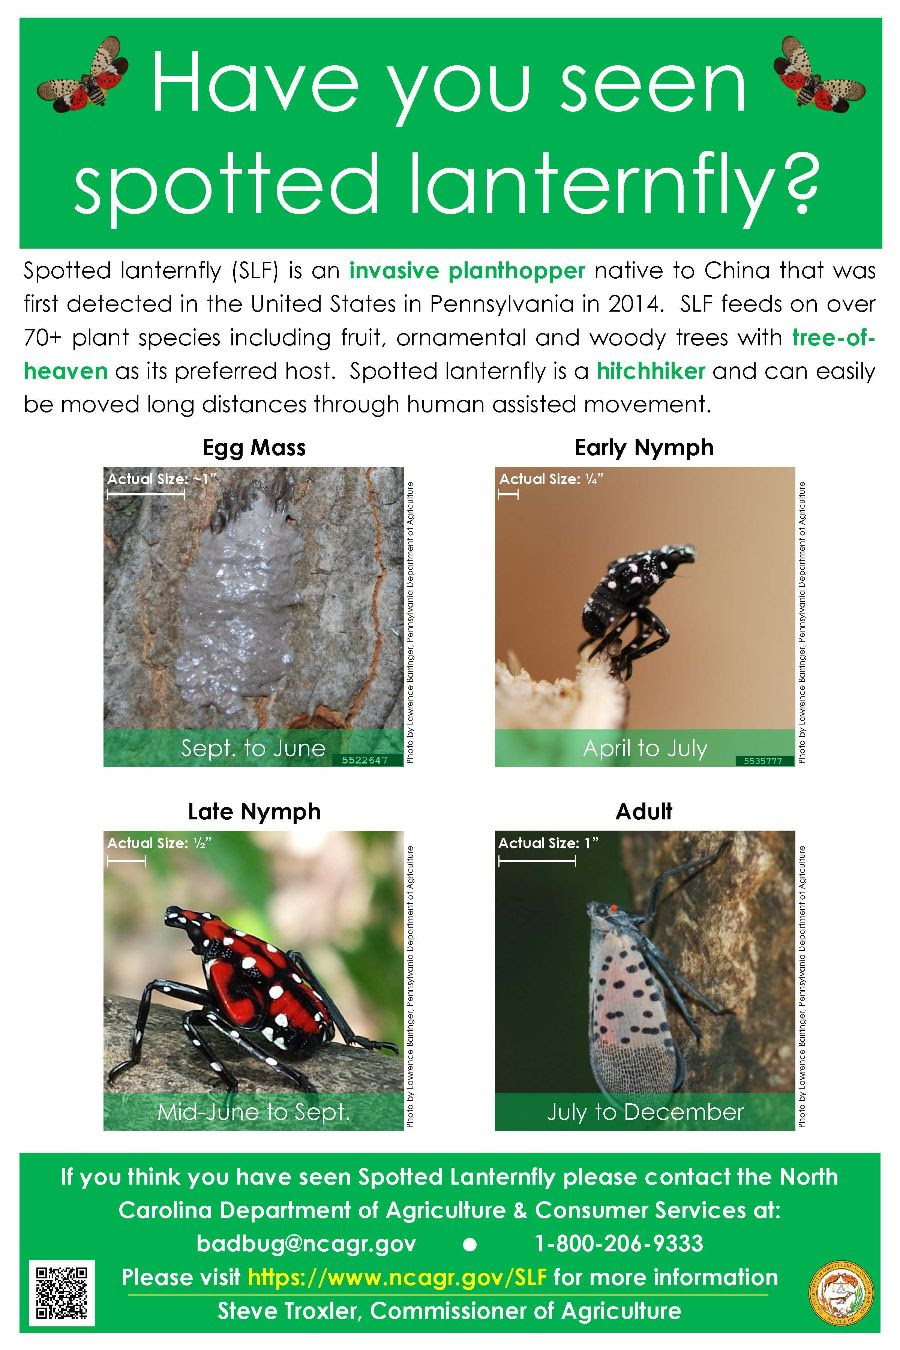 Spotted Lanternfly description